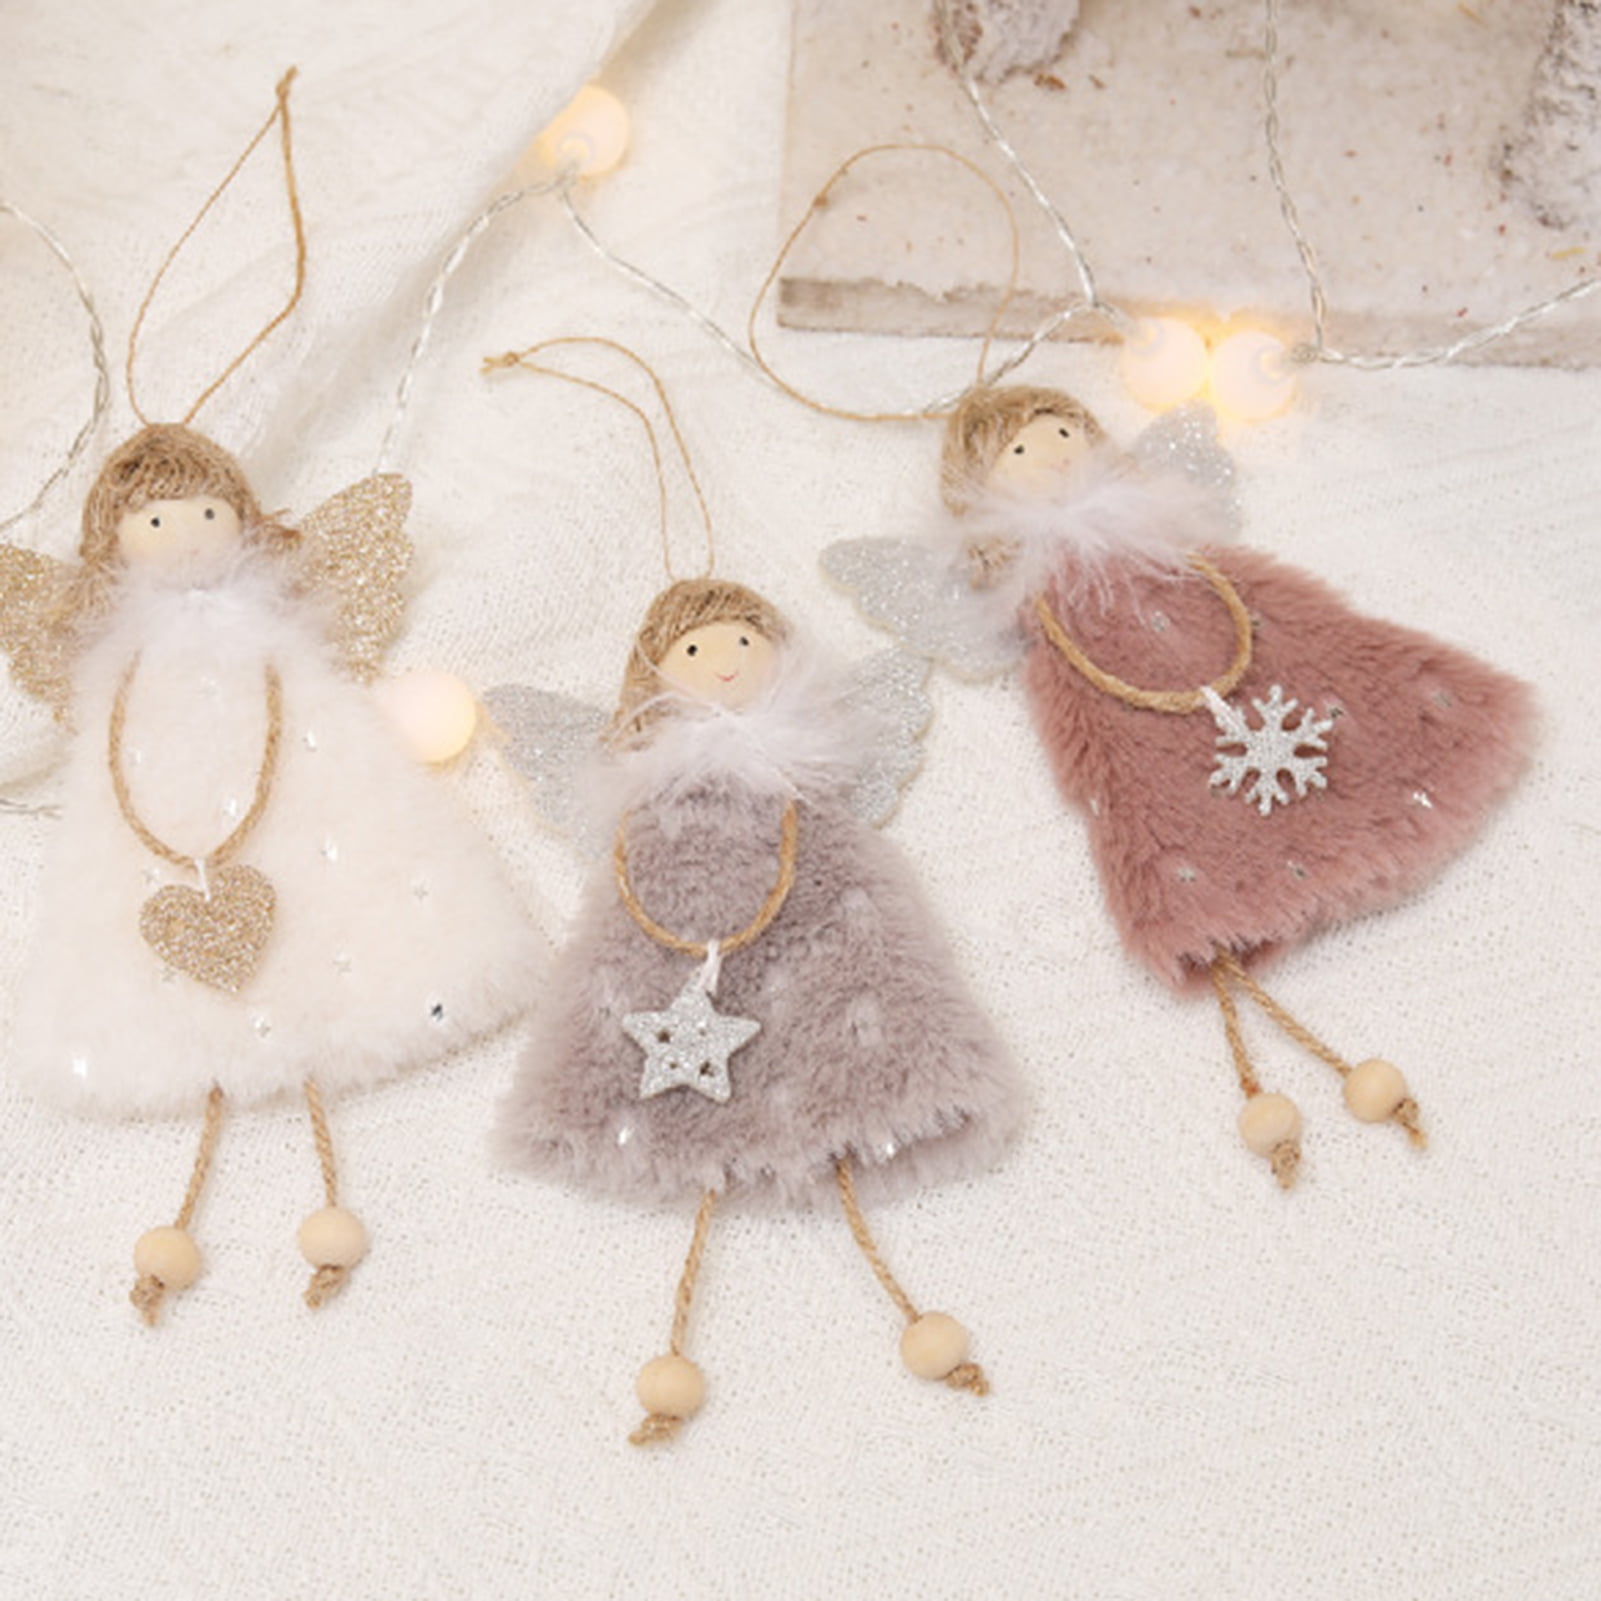 Wholesale Angel Hair Christmas Decoration To Get Into The Christmas Spirit  - Alibaba.com